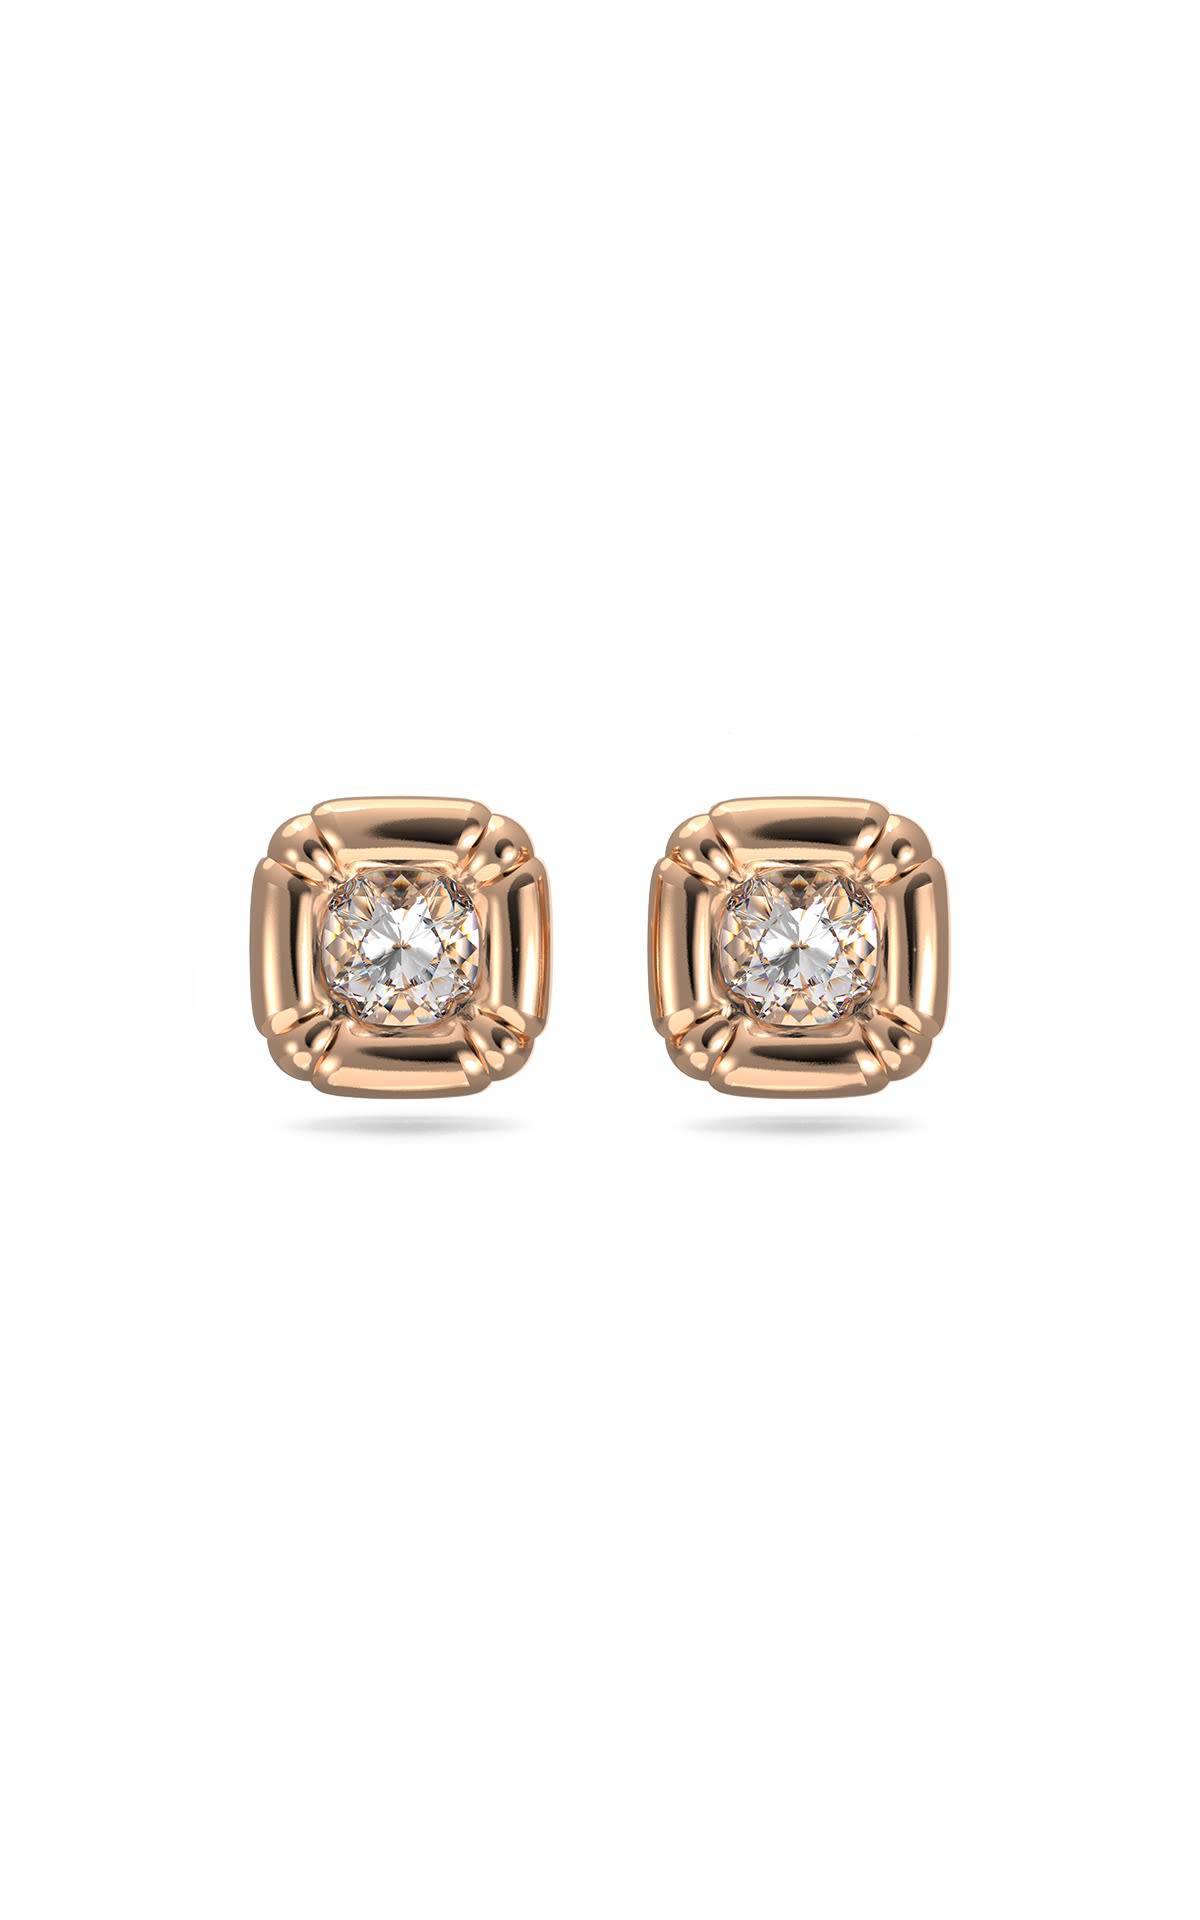 Rose gold earrings with diamond detail Swarovski